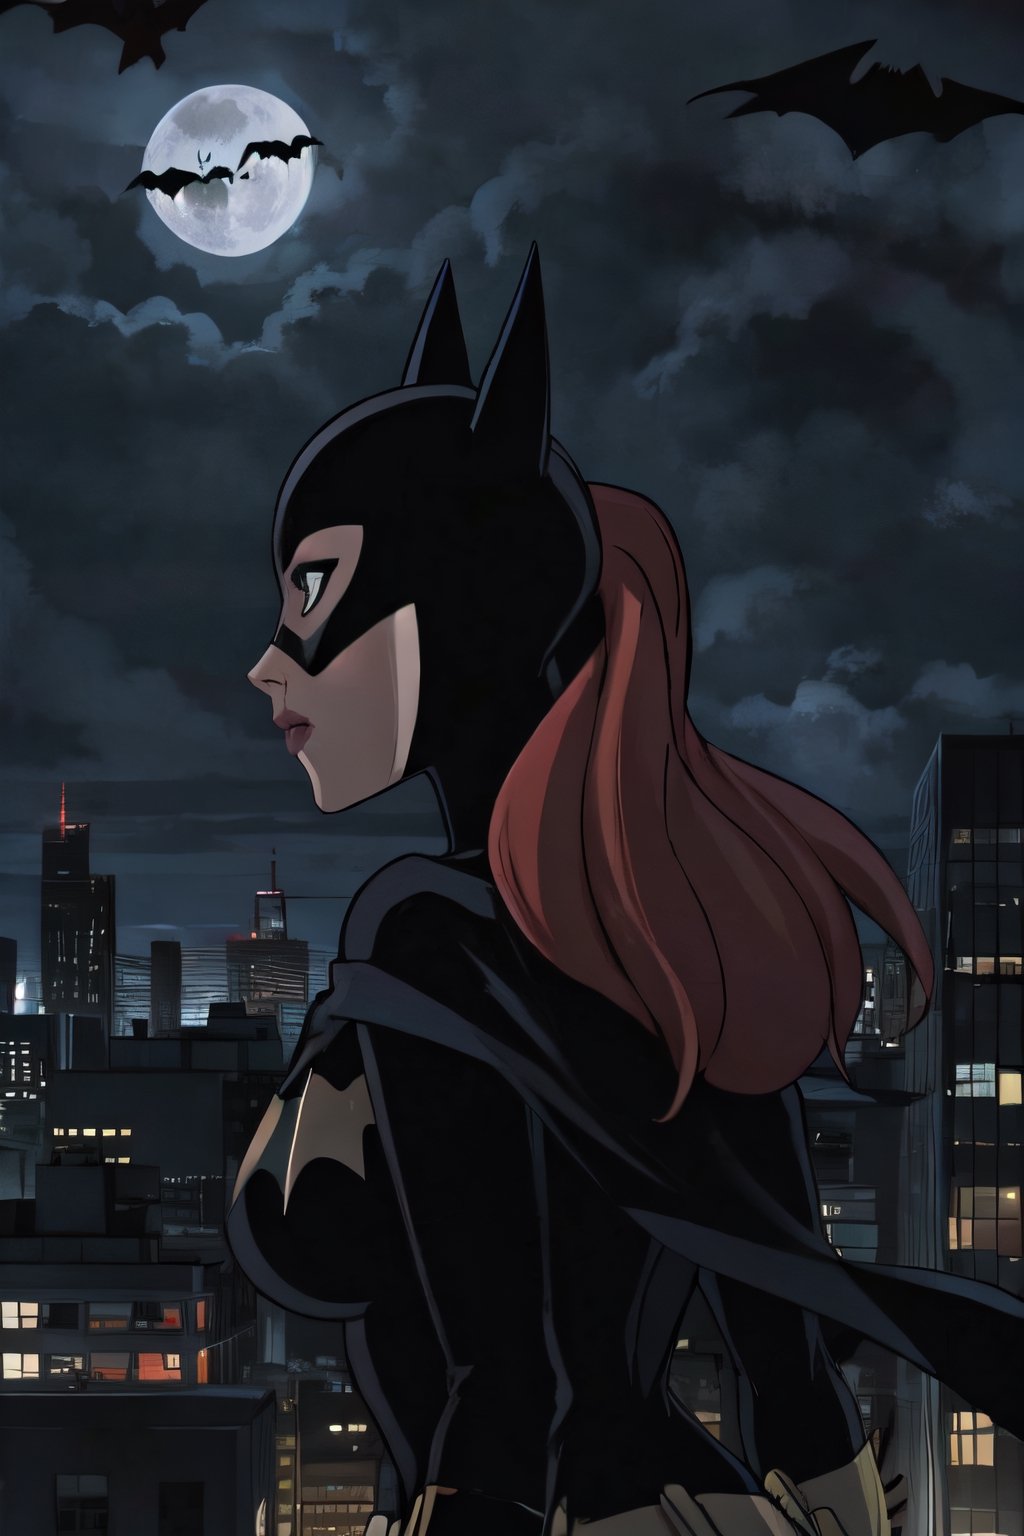 Batgirl, facial portrait, sexy stare, smirked, on top of building, city below, cloudy sky, lightning, full moon, bats flying, butt shot 